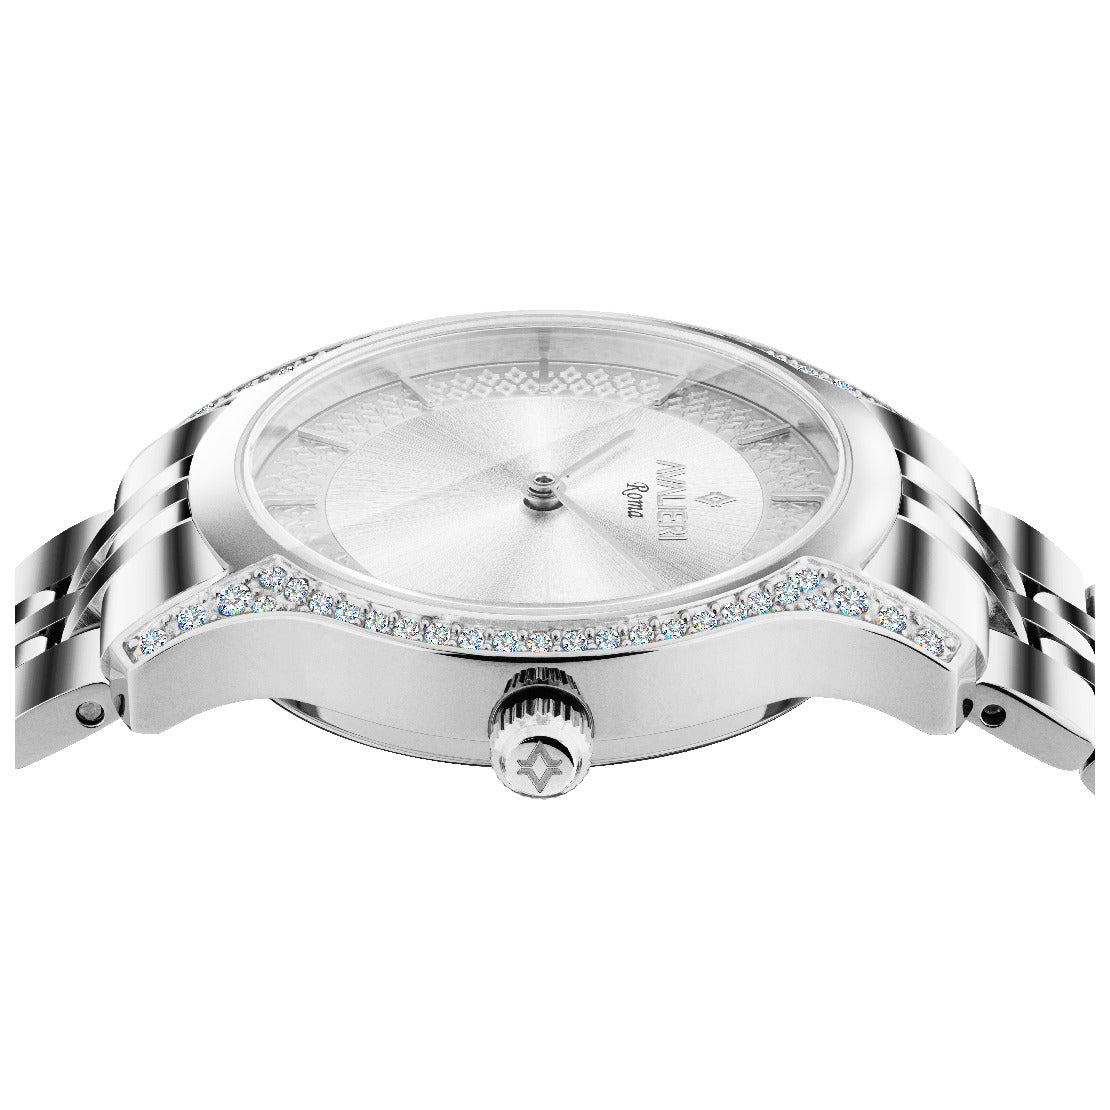 Avalieri Women's Quartz Watch Silver Dial - AV-2568B